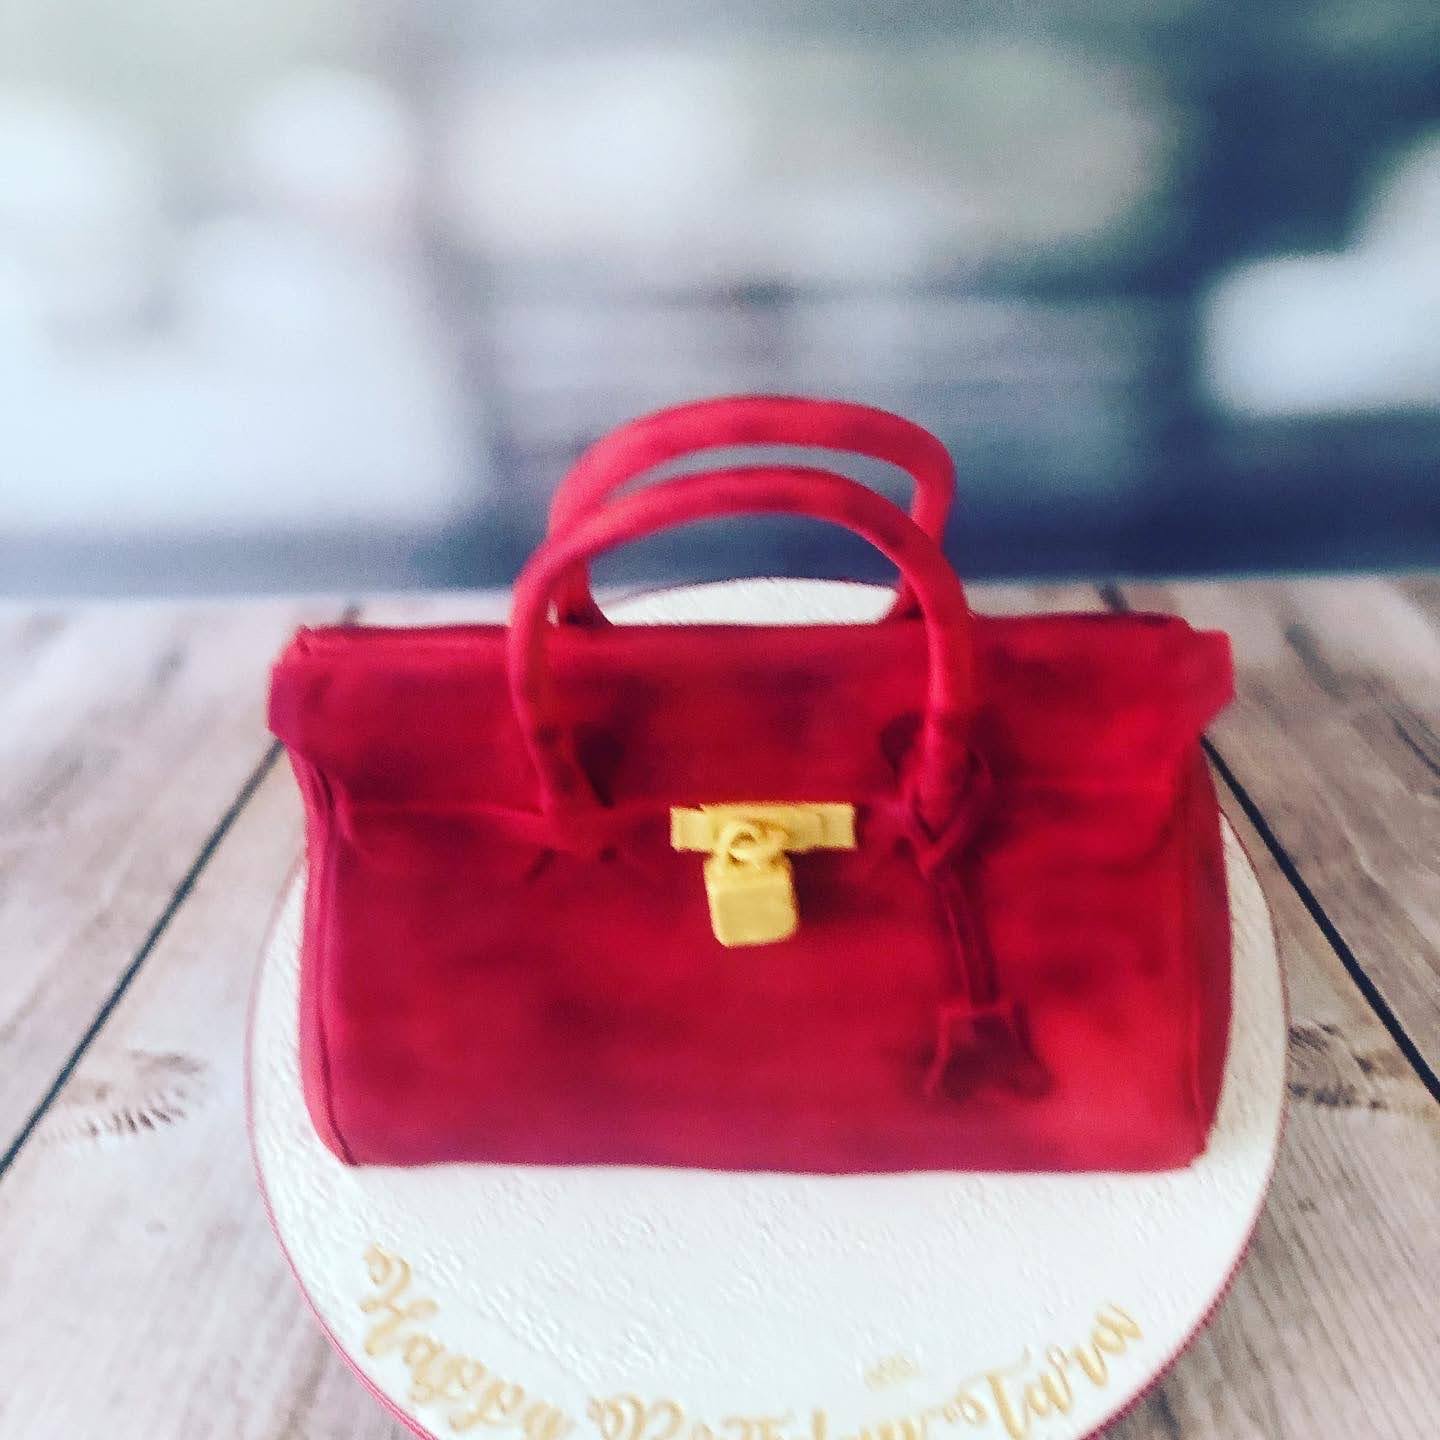 Red Hermes bag cake